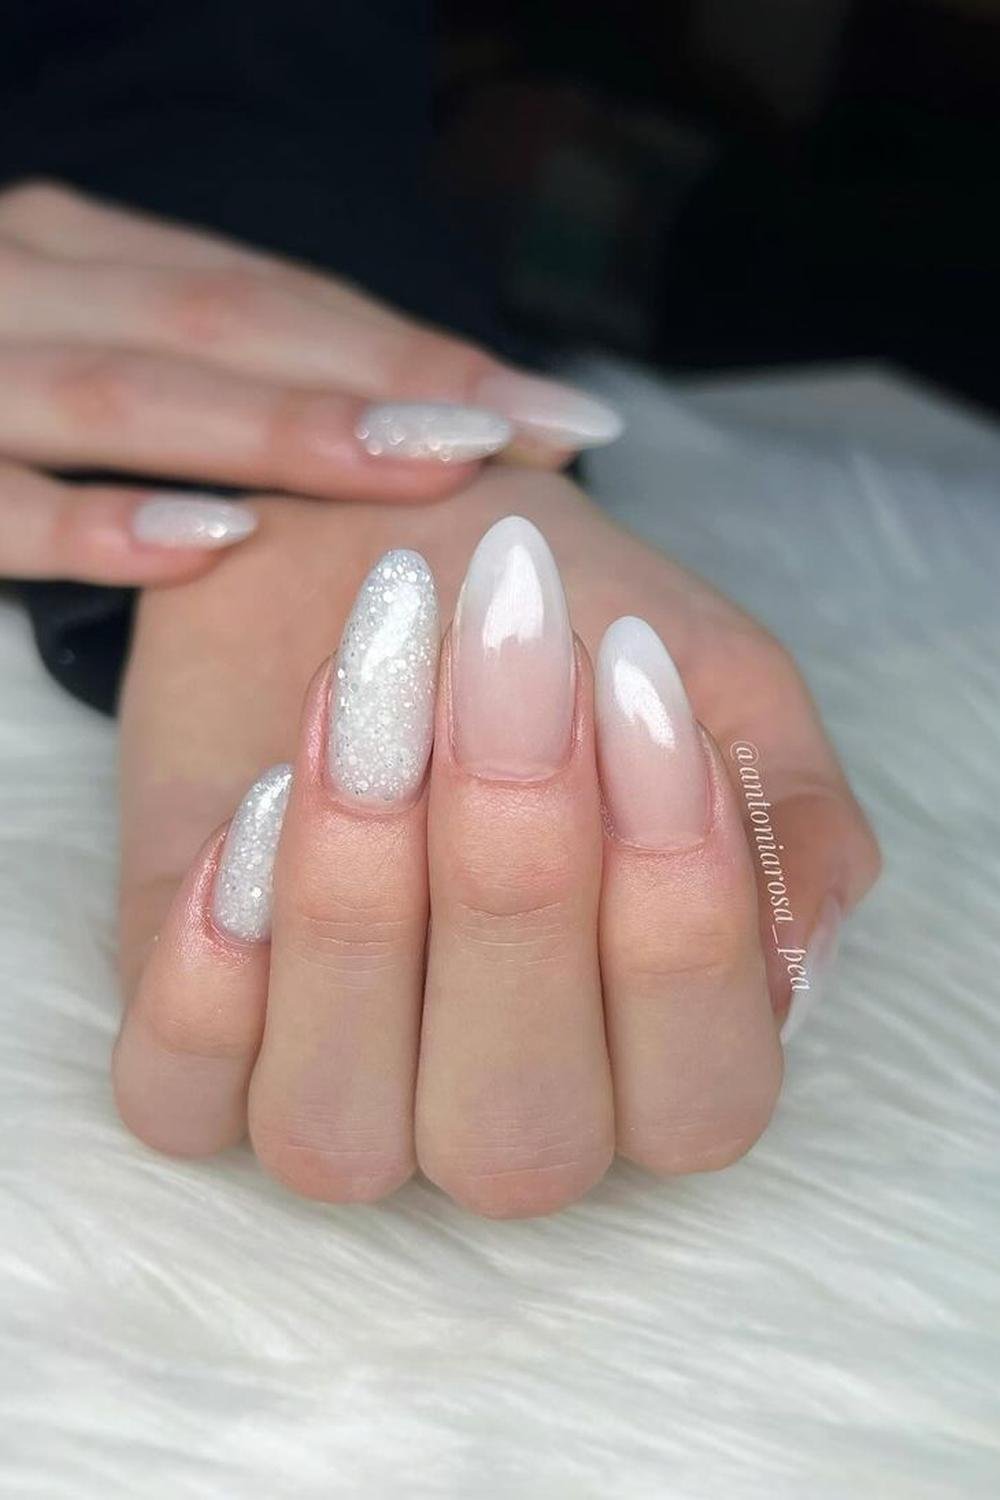 4 - Picture of White Glitter Nails